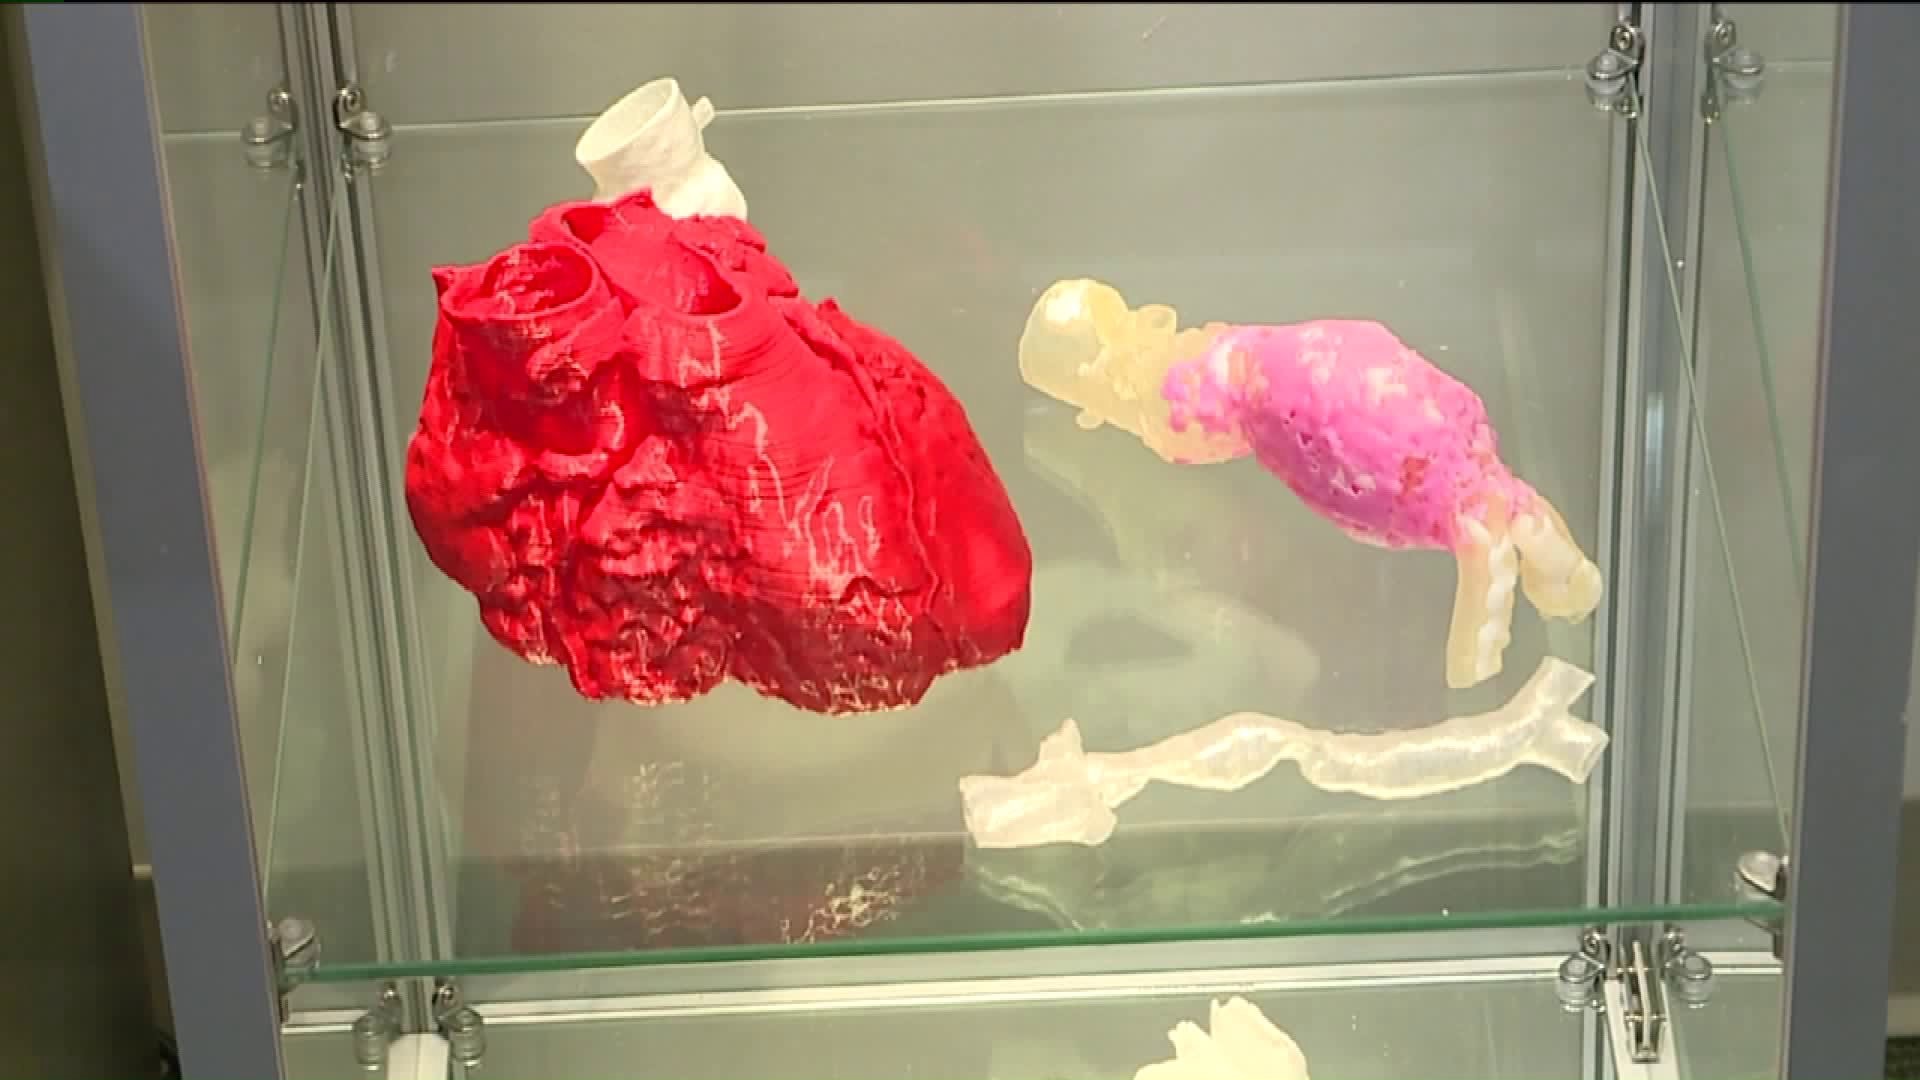 3D Printing Replicates Body Parts